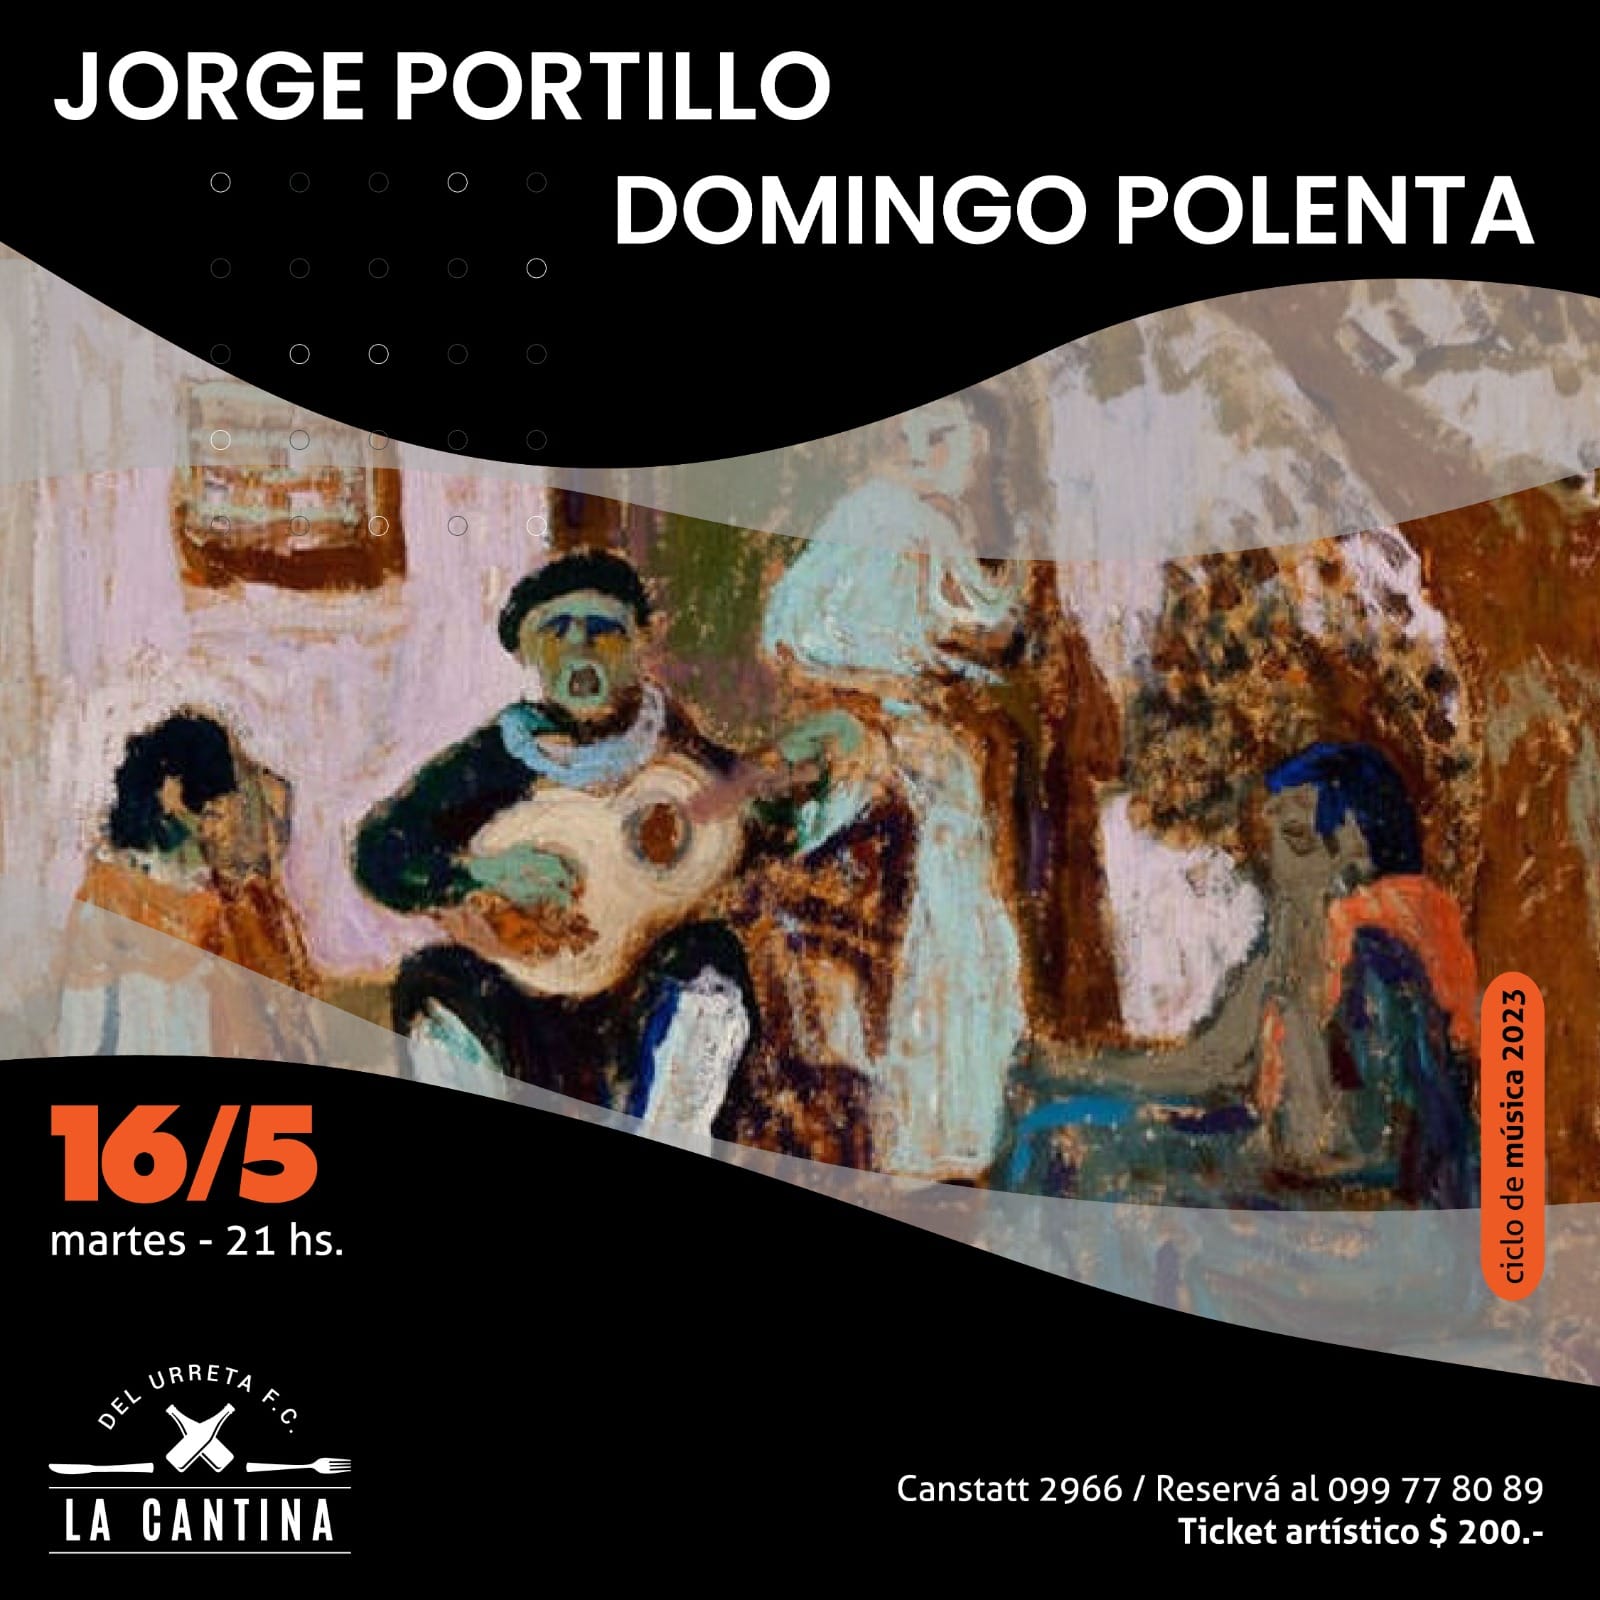 Cantina del Urreta con Domingo Polenta